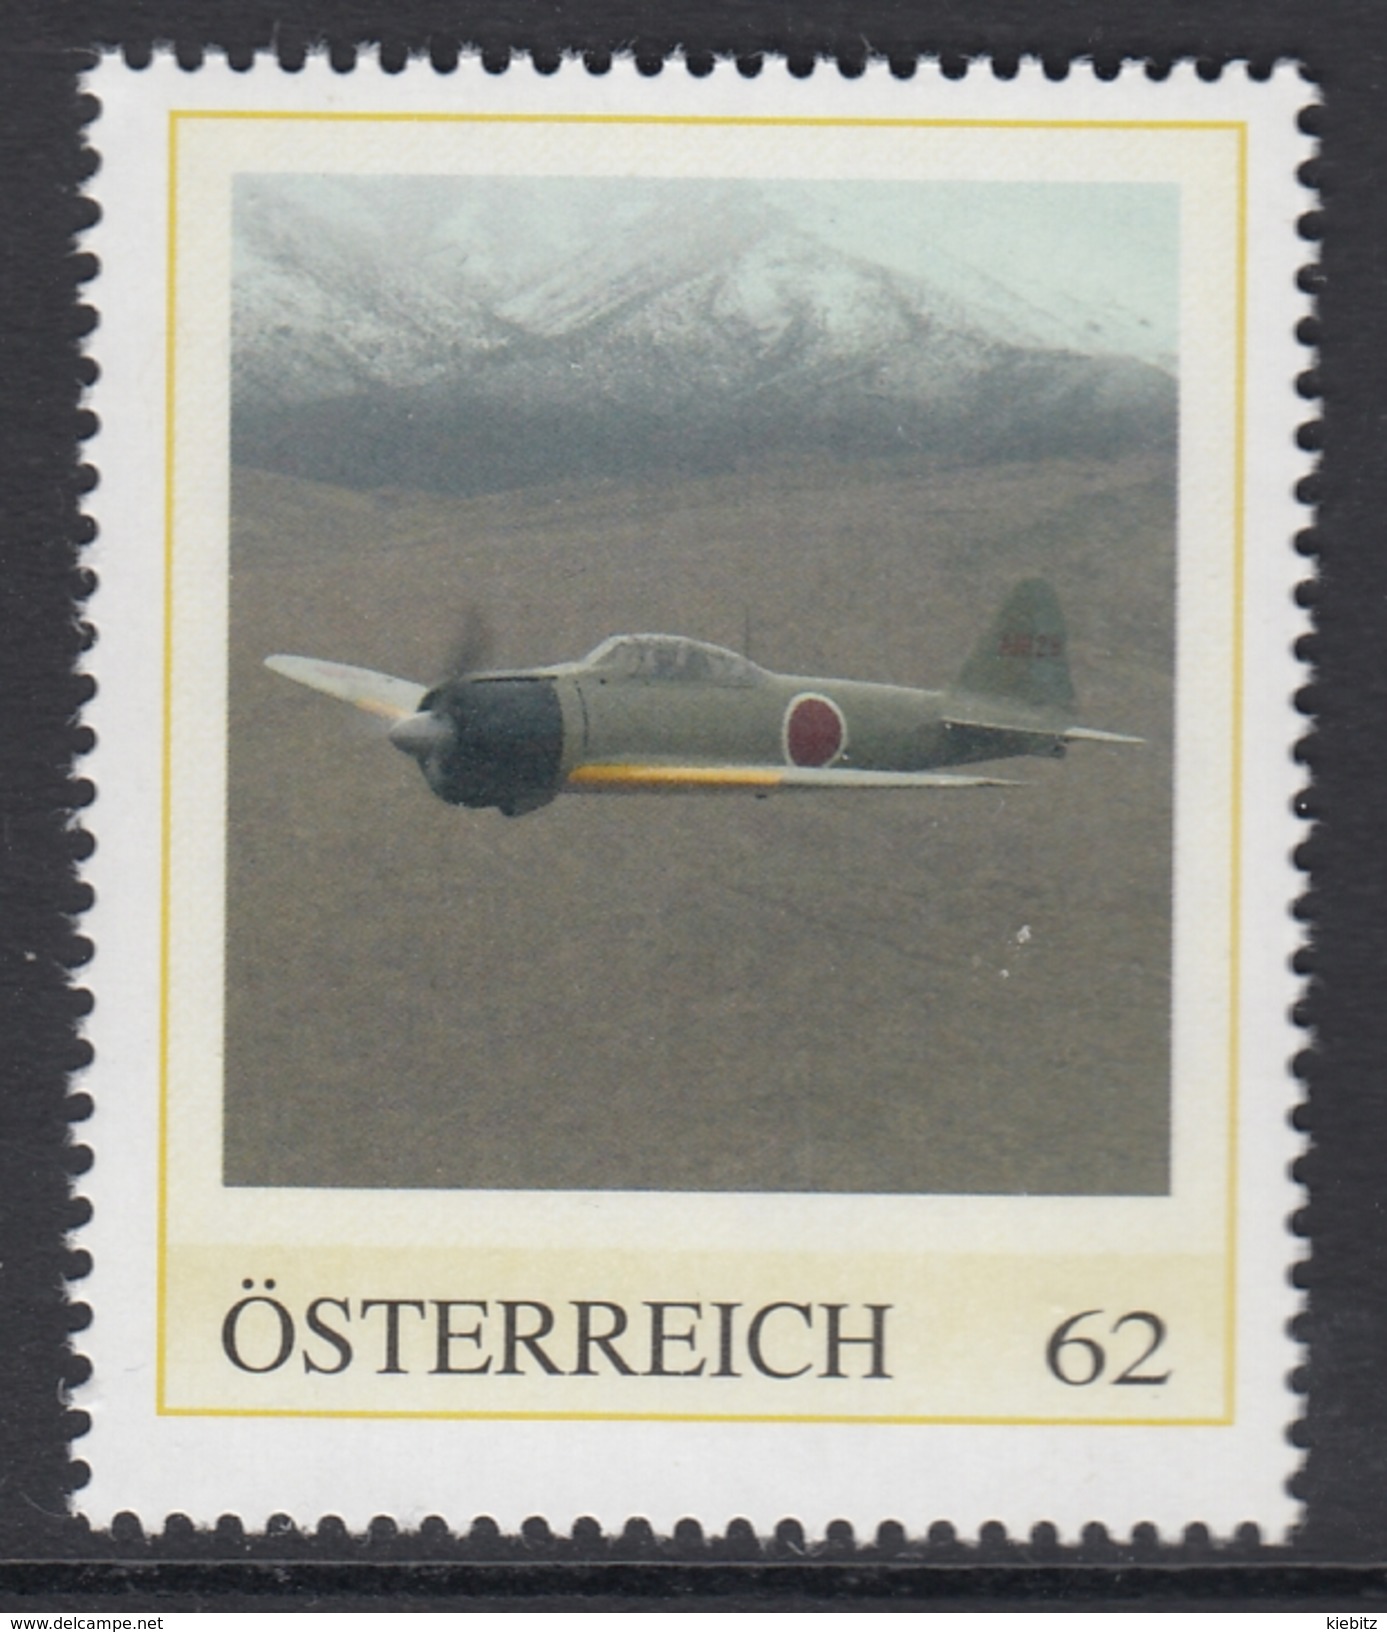 ÖSTERREICH 2016 ** 2.WK -Mitsubishi A6M Zero, Japanisches Kampfflugzeug, Pearl Harbour 1941 - PM Personalized Stamps MNH - 2. Weltkrieg